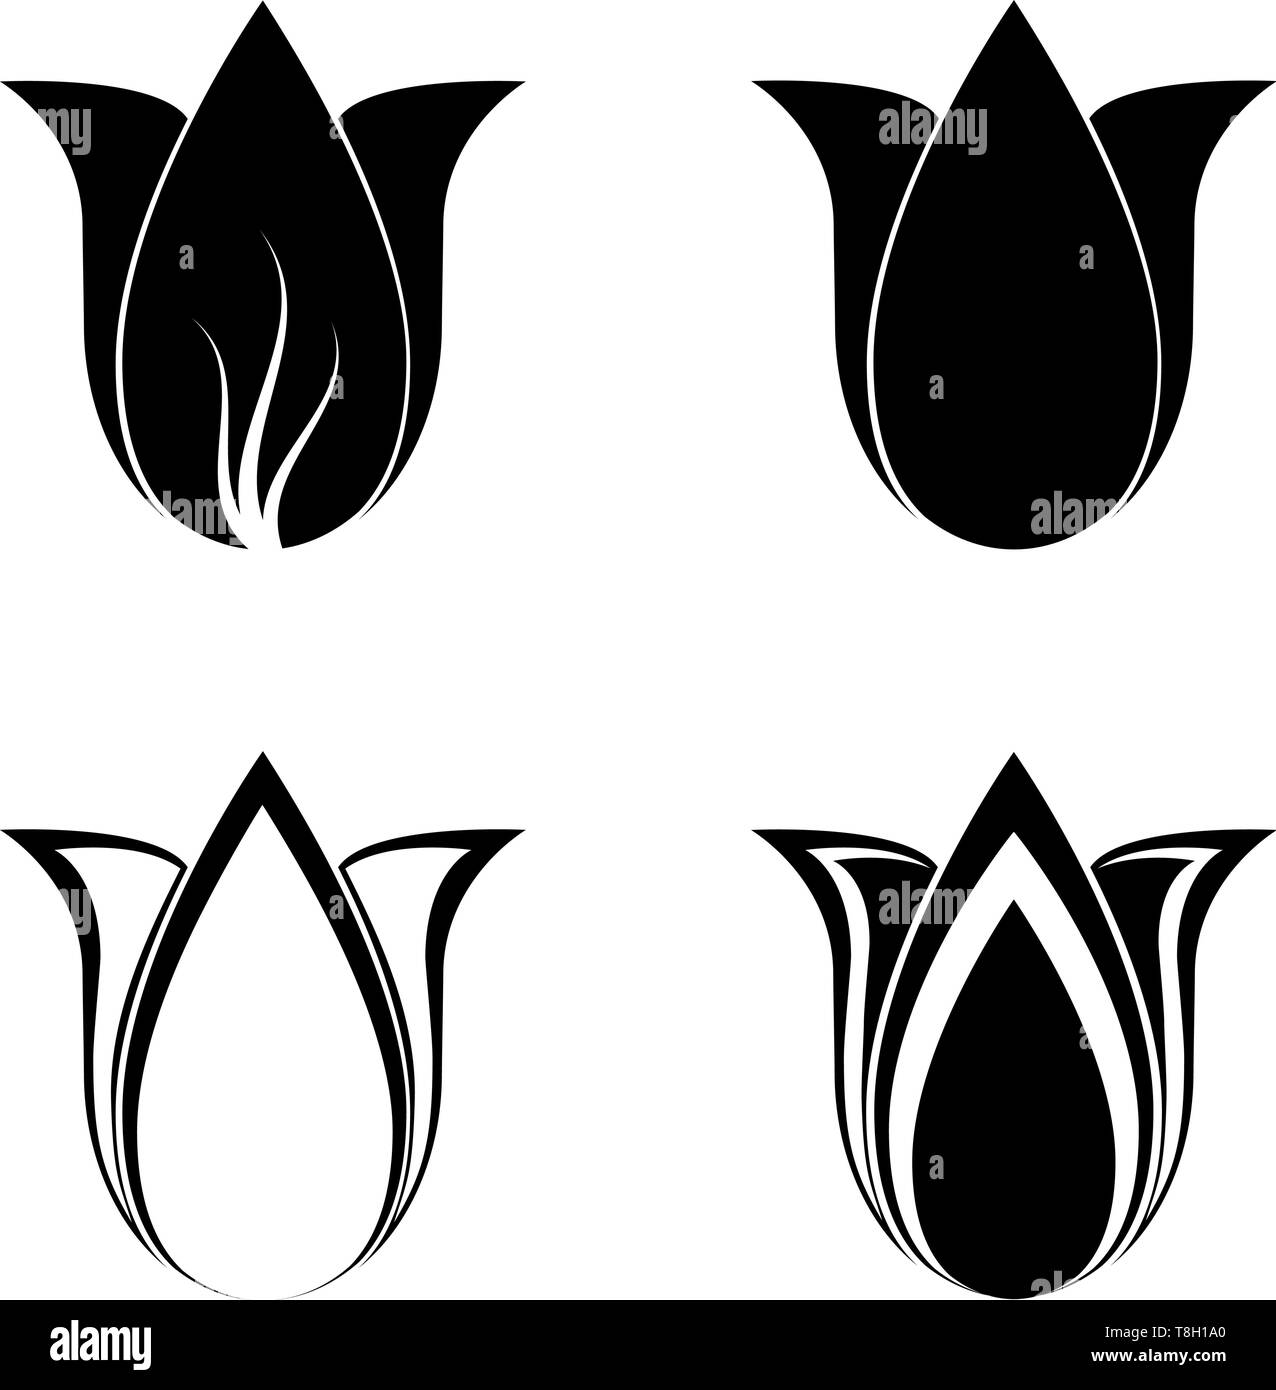 four vector tulip silhouettes for design Stock Vector